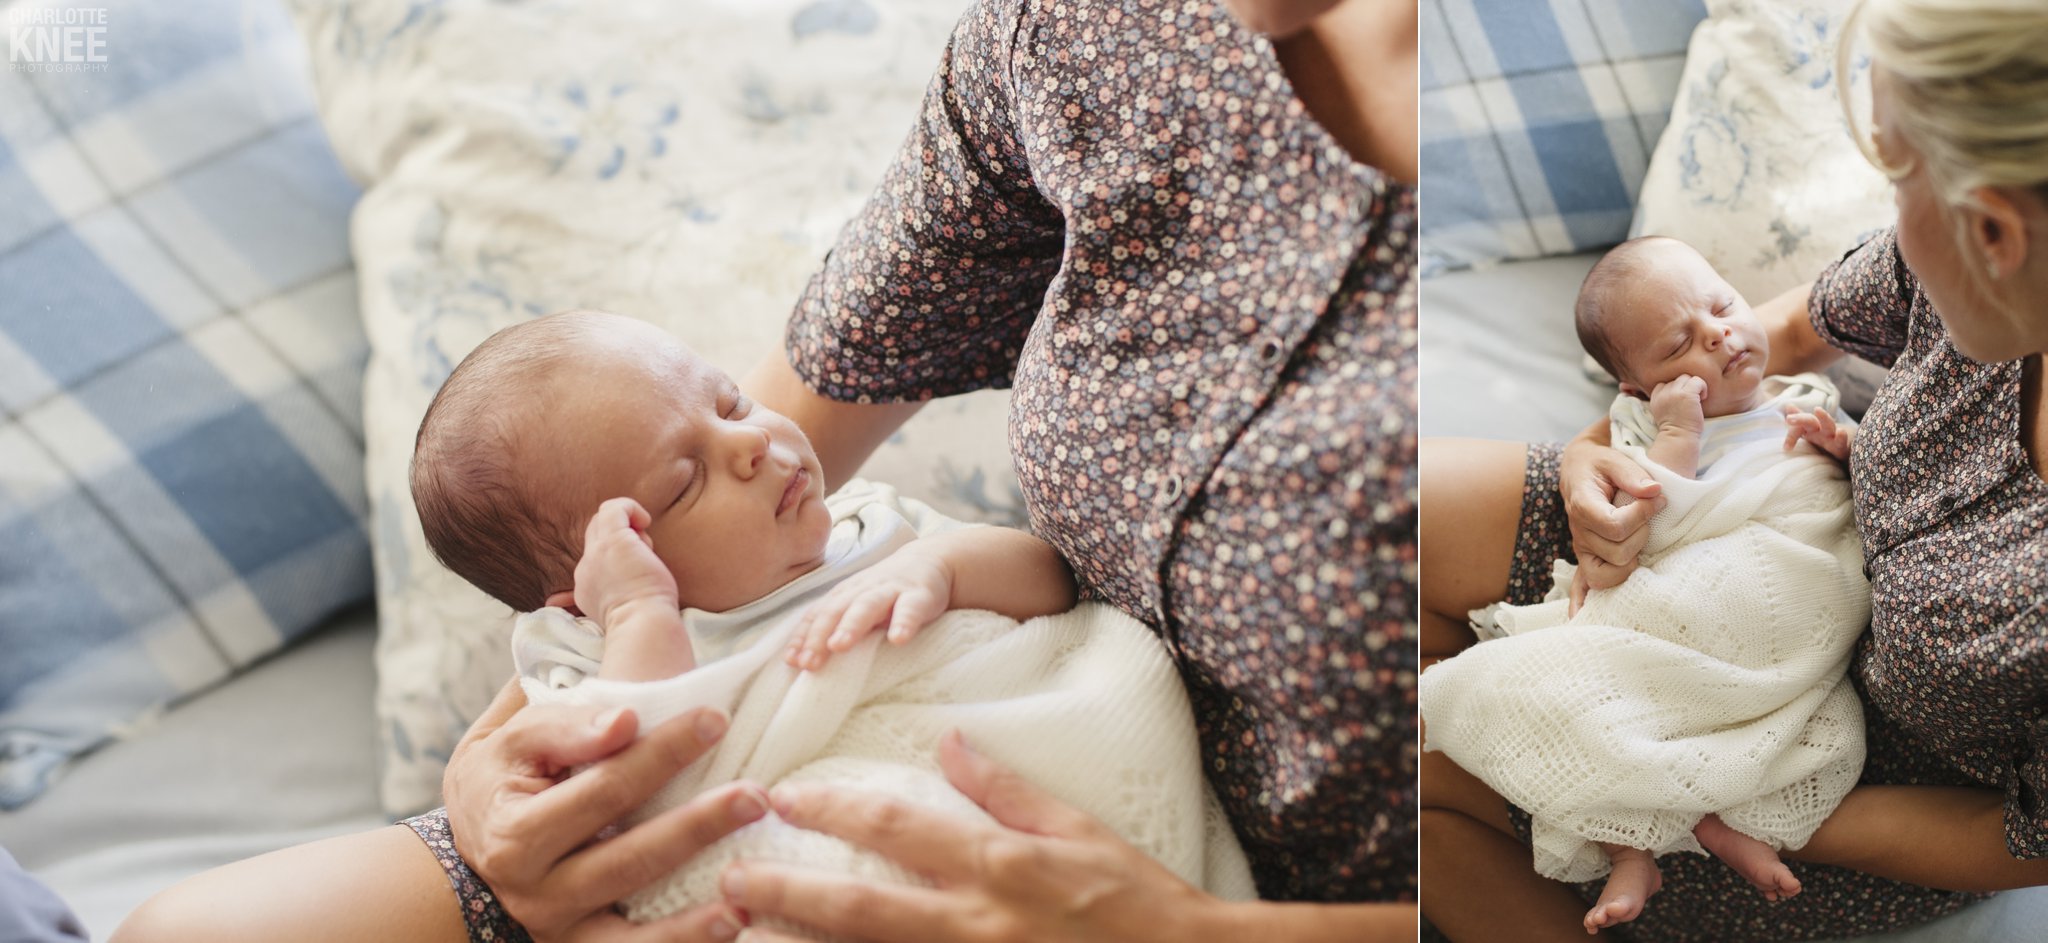 Newborn-Photography-Baby-Milo-Charlotte-Knee-Photography_0002.jpg